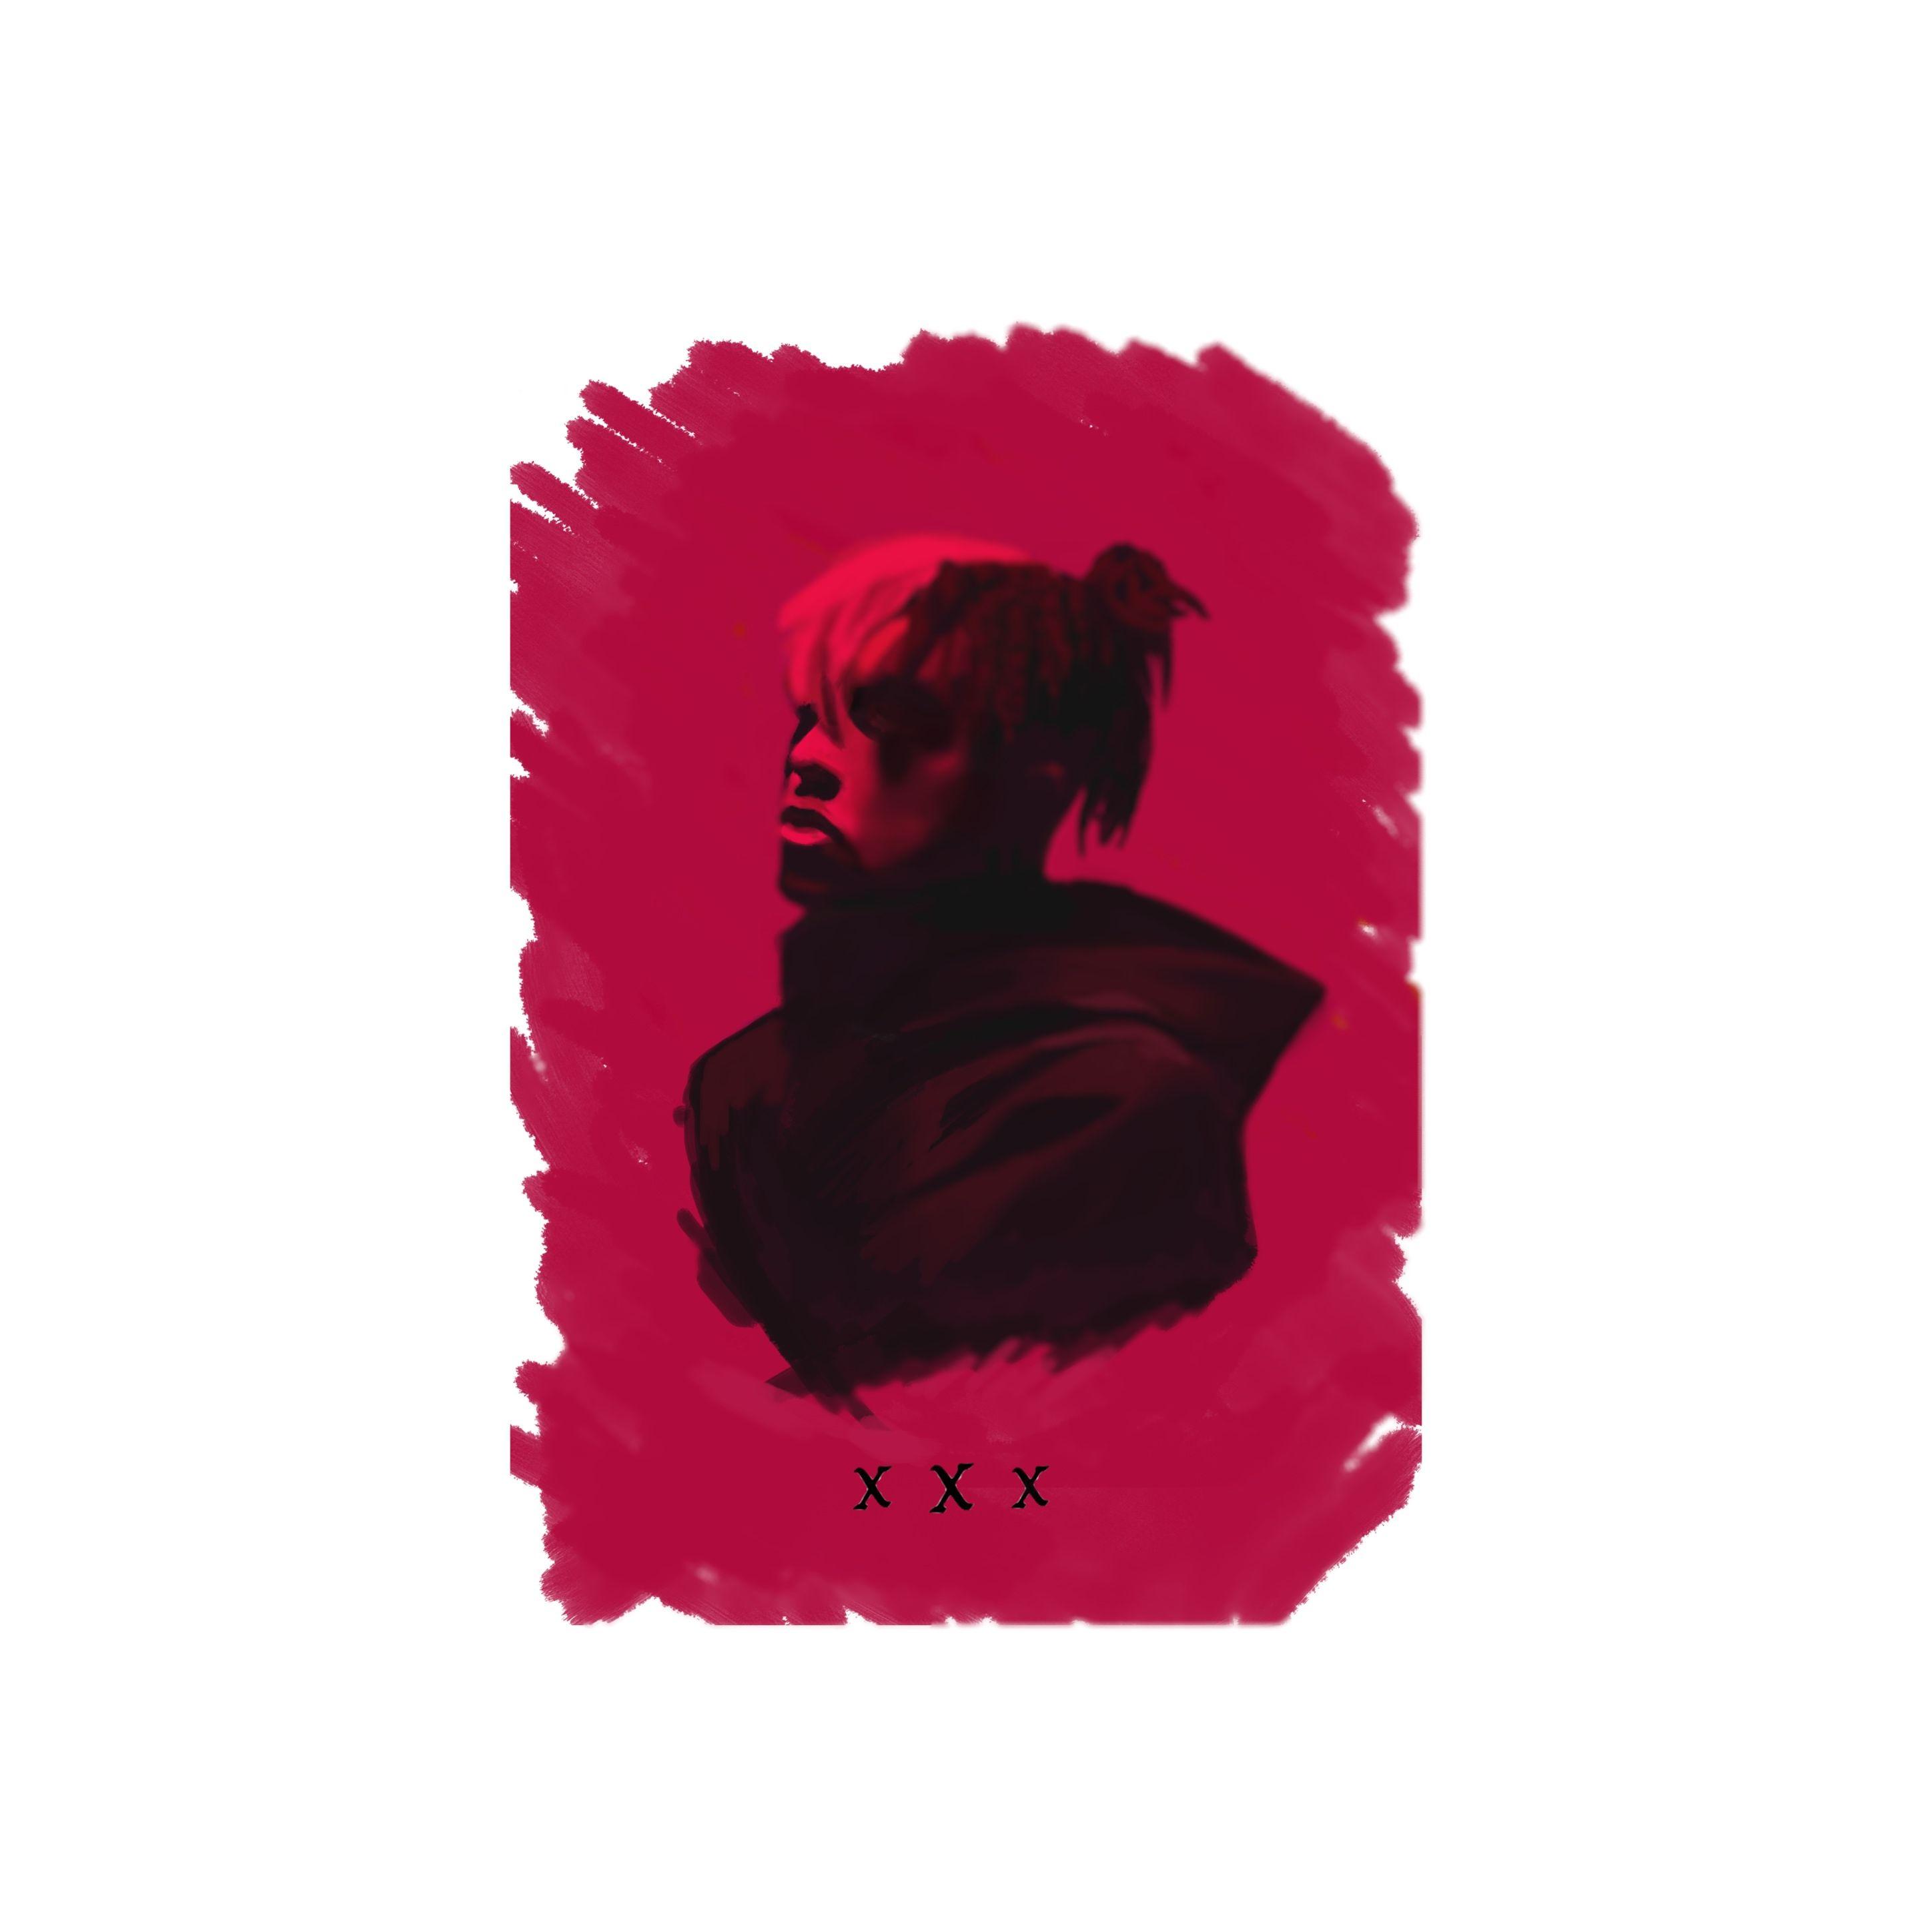 XXXTentacion in black and red on a red background - XXXTentacion